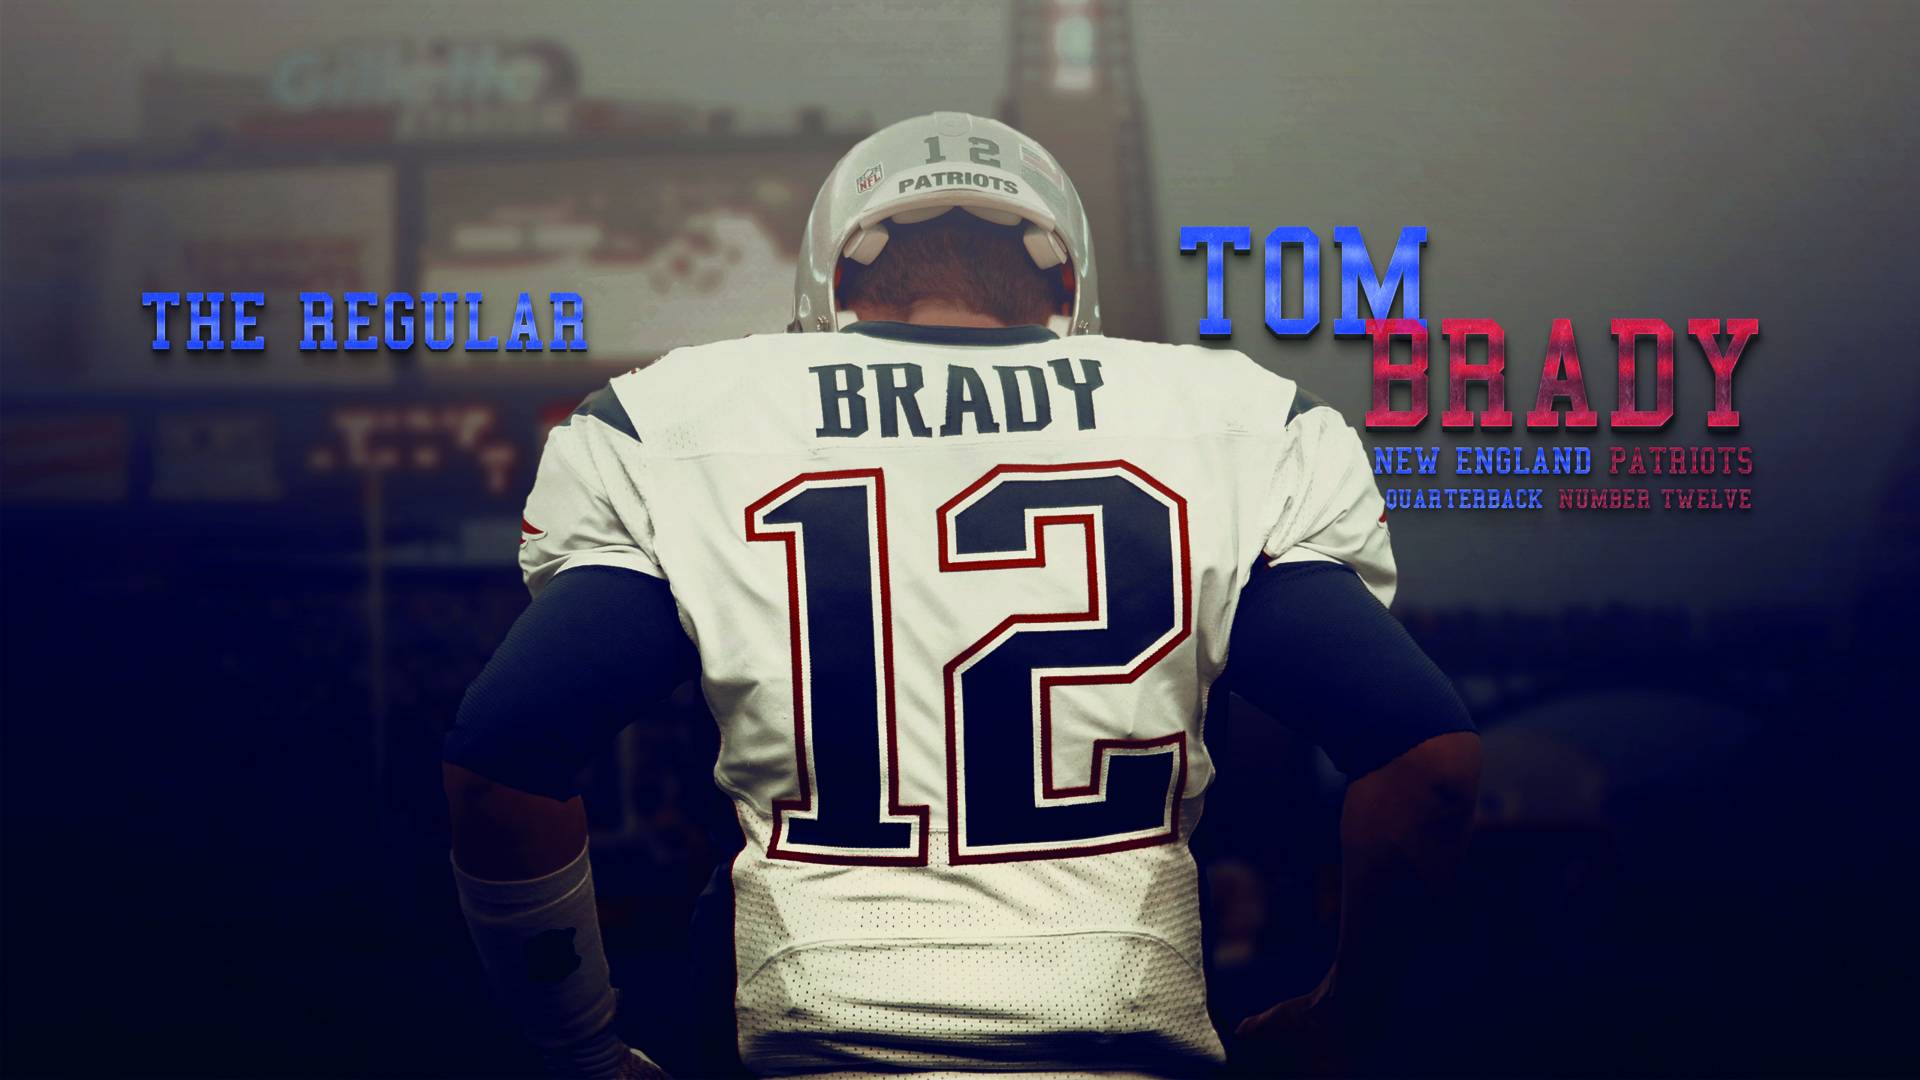 Gorgeous High Resolution Photo of Tom Brady, Full HD 1080p